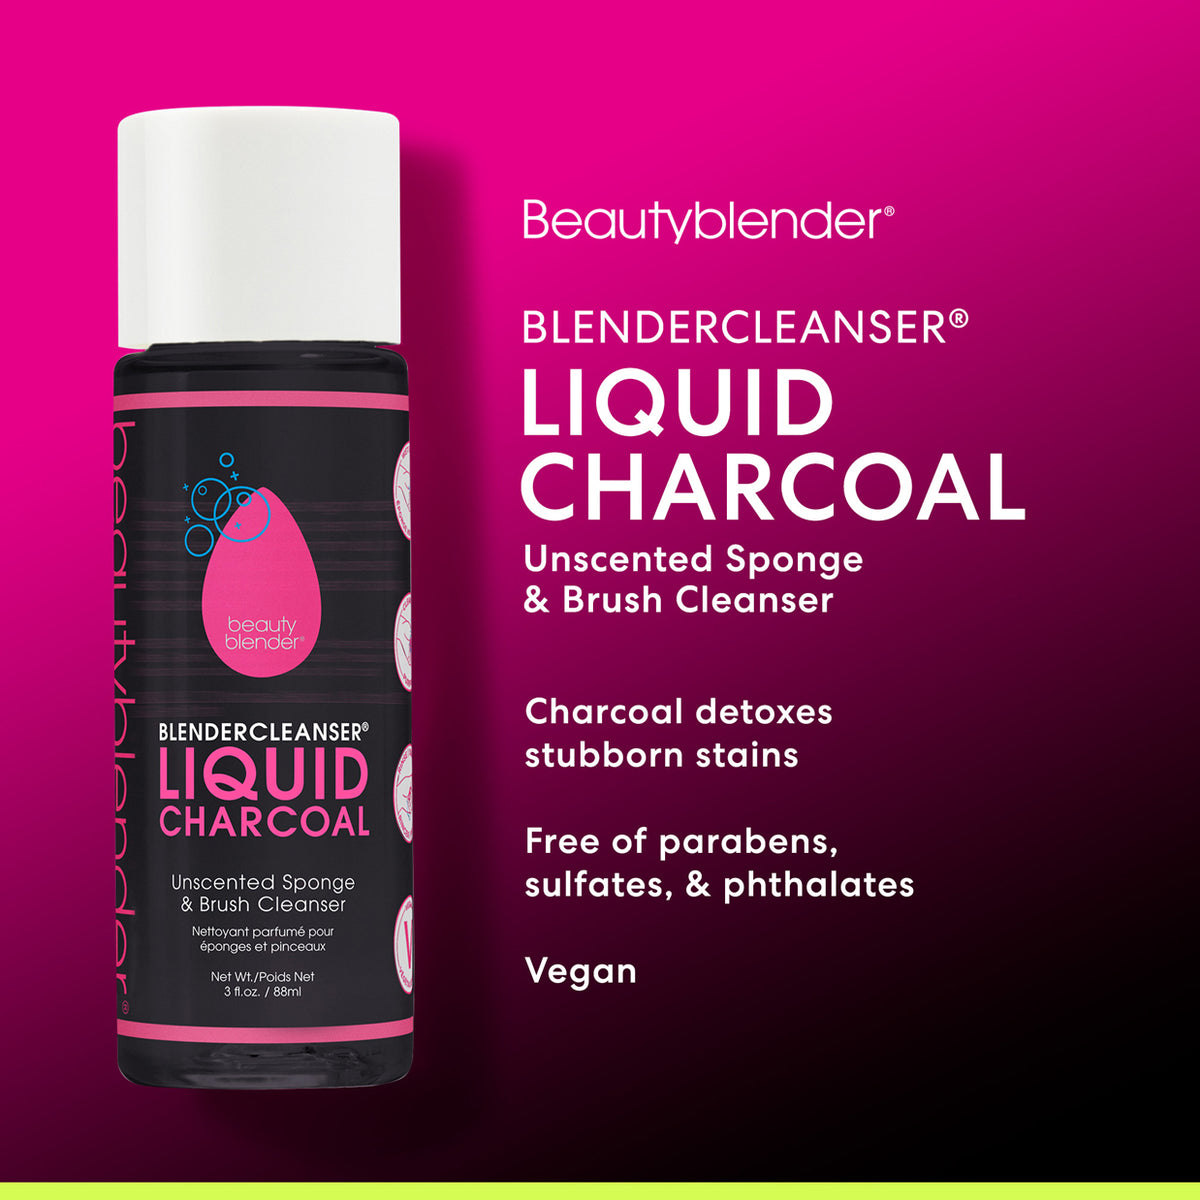 Blendercleanser® Liquid Charcoal Unscented Sponge & Brush Cleanser.